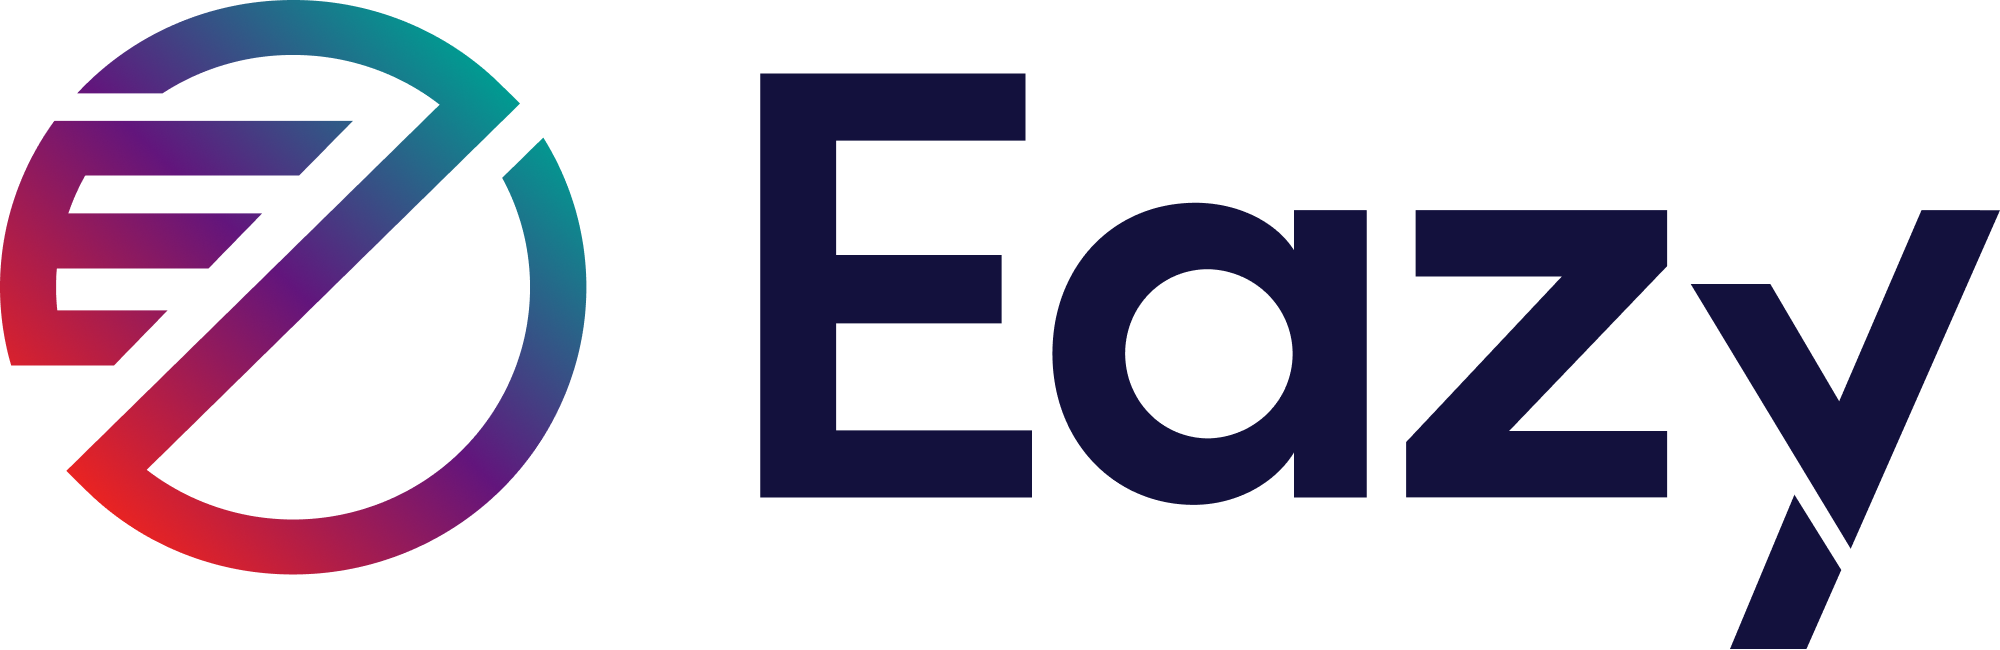 Eazy Digital Logo